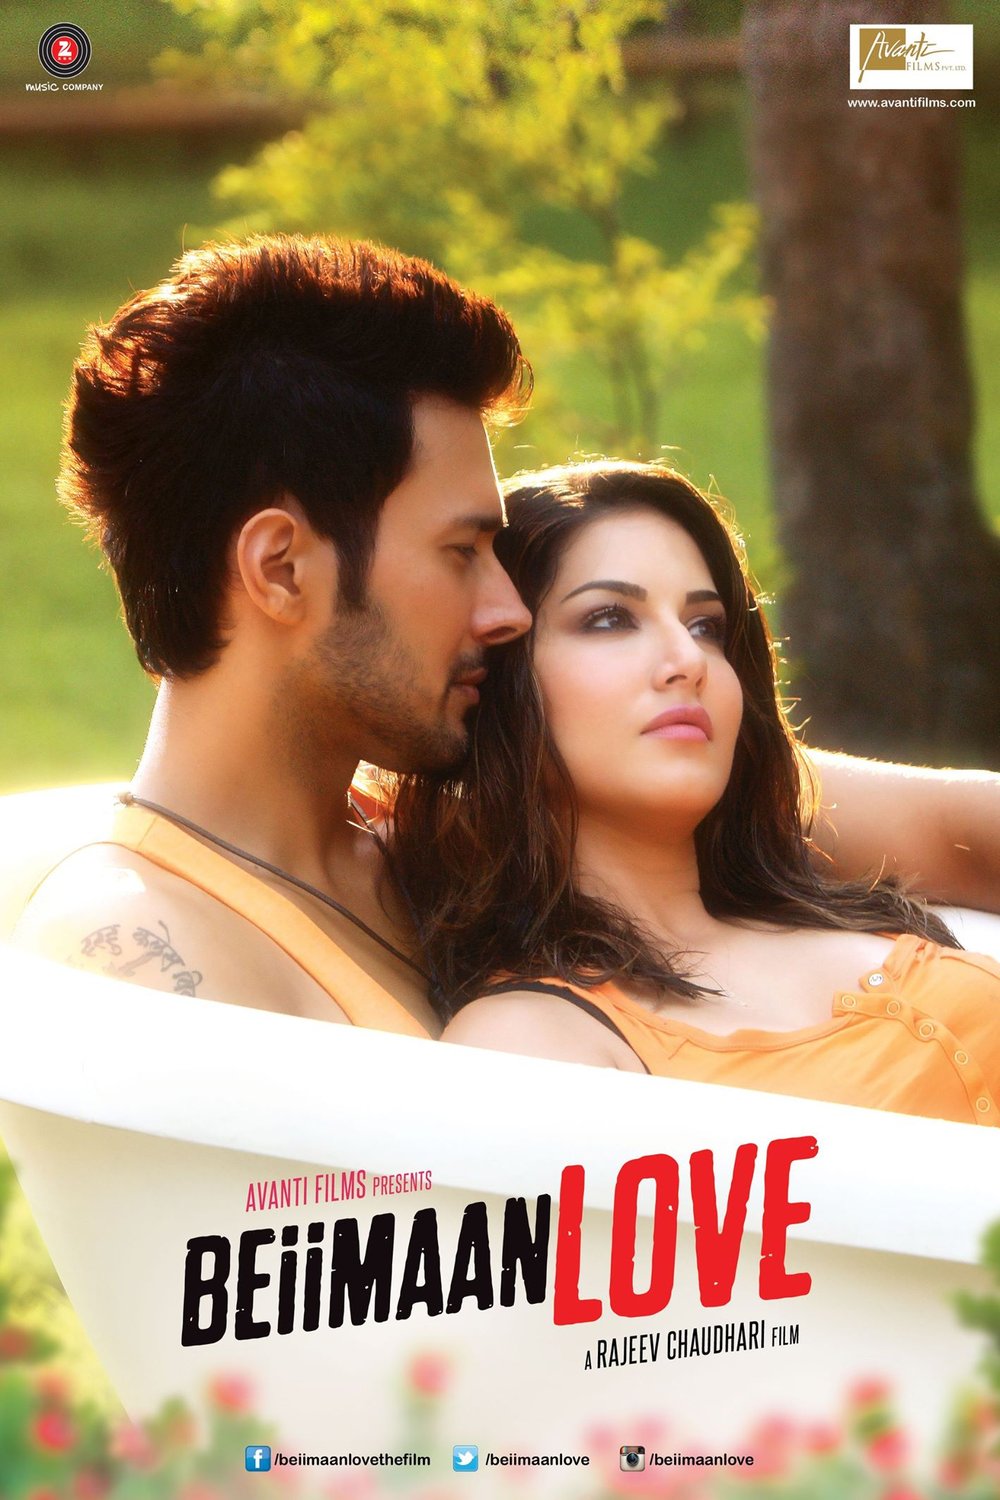 Hindi poster of the movie Beiimaan Love